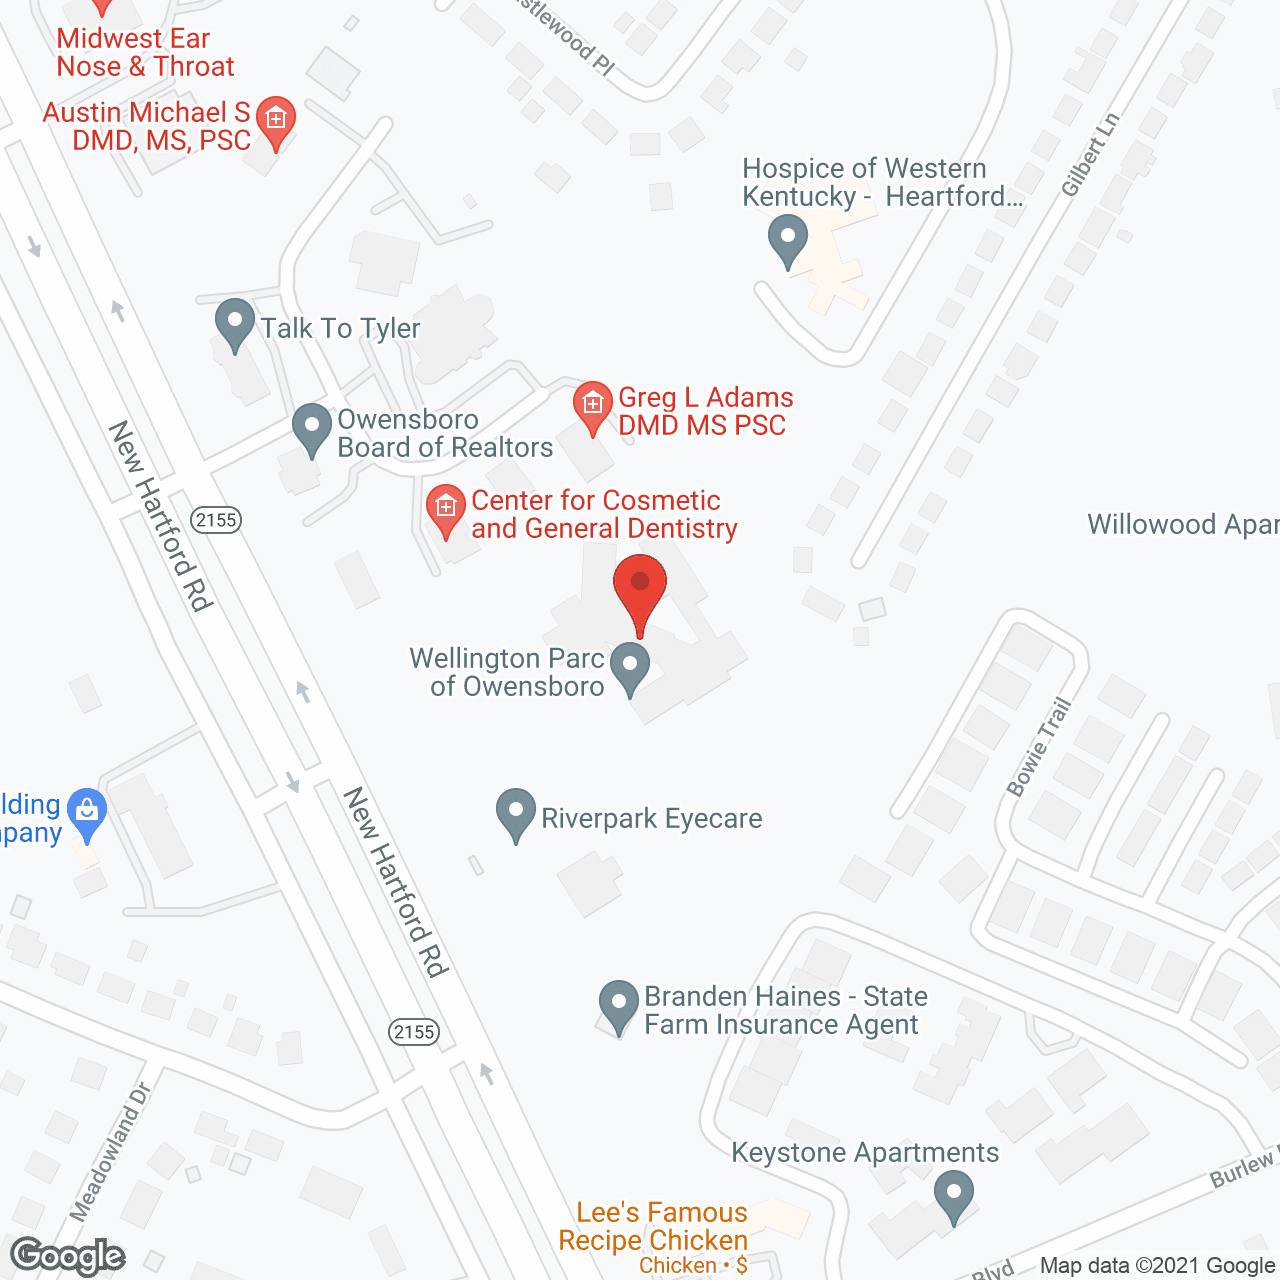 Wellington Parc of Owensboro in google map